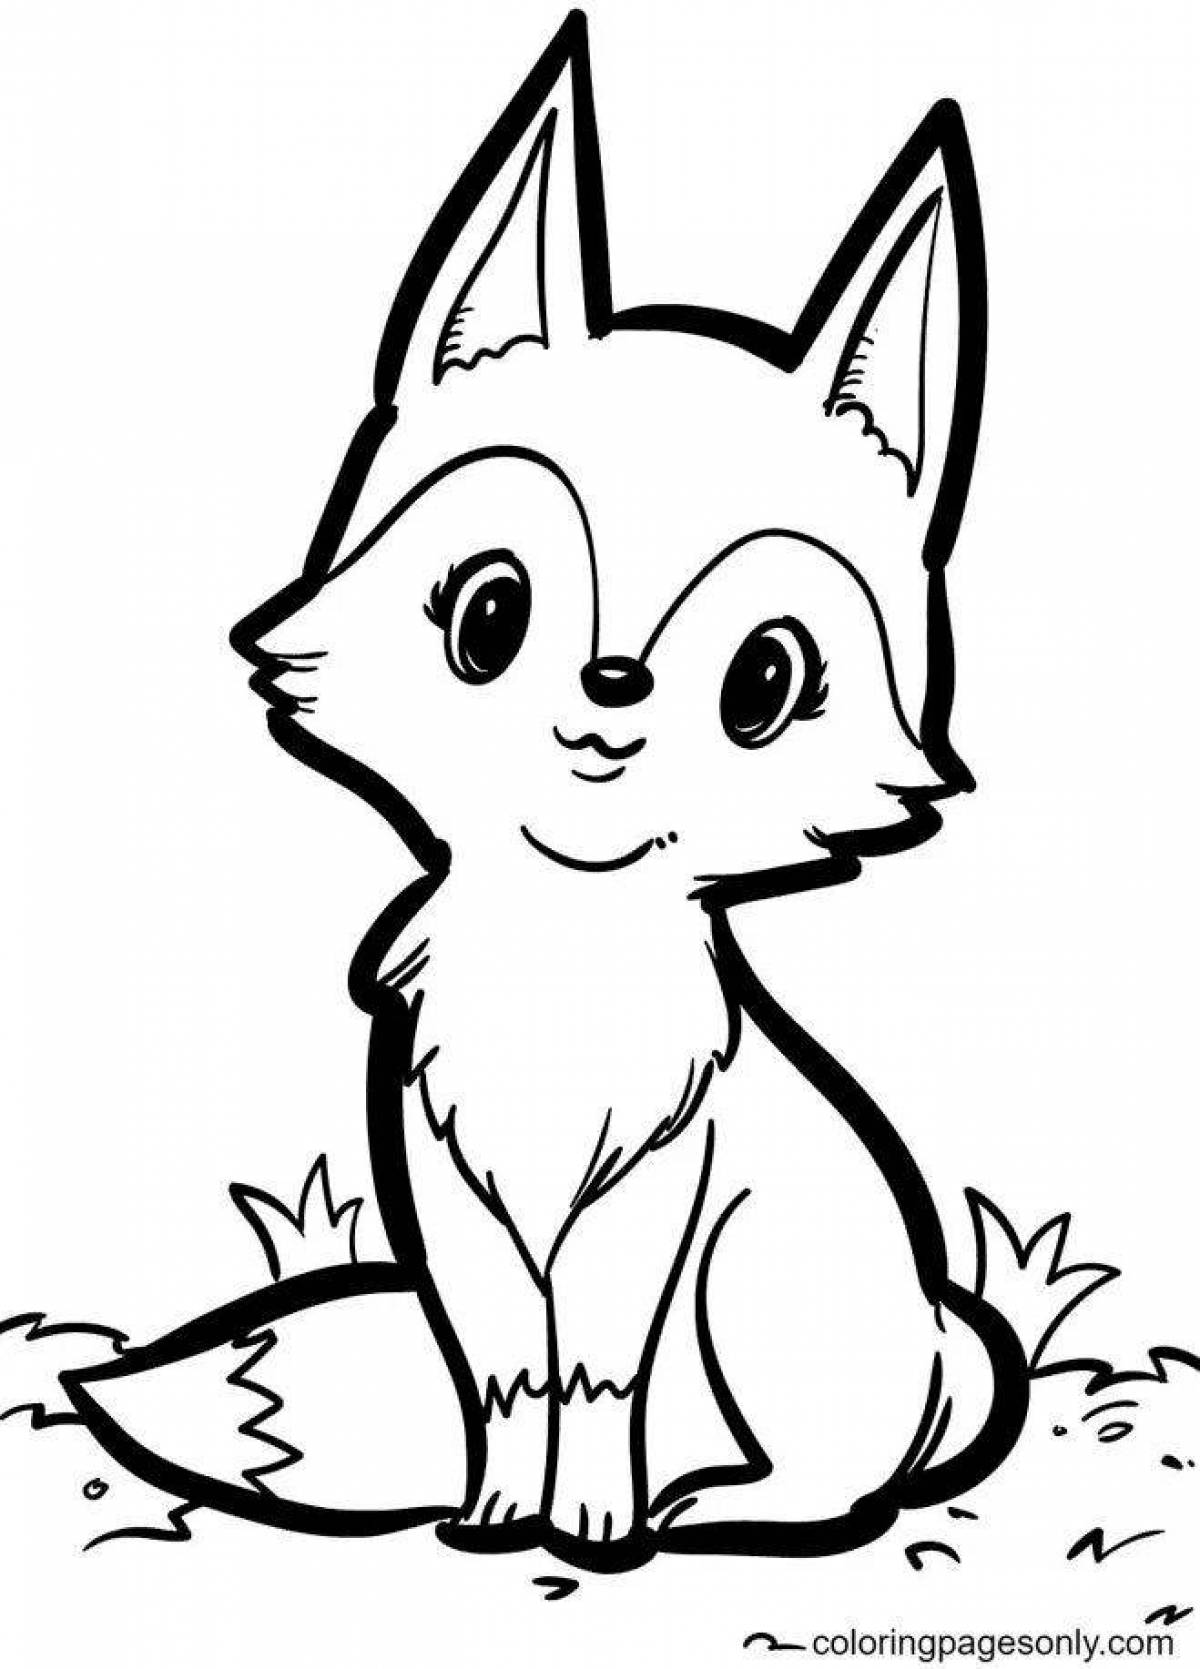 Fancy coloring fox